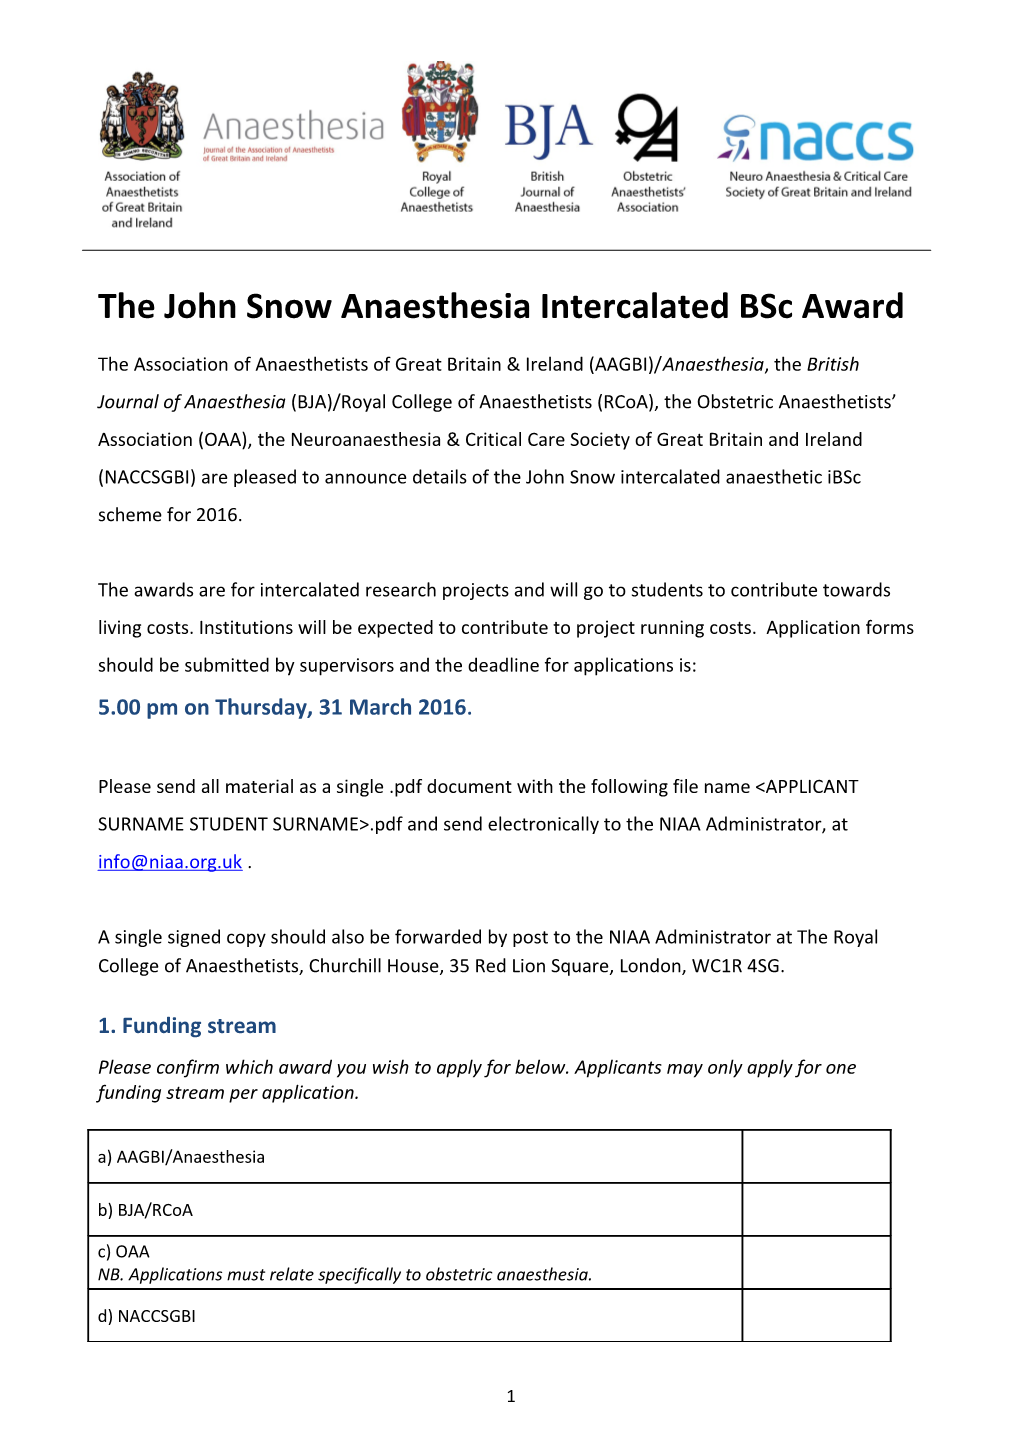 The John Snow Anaesthesia Intercalated Bsc Award